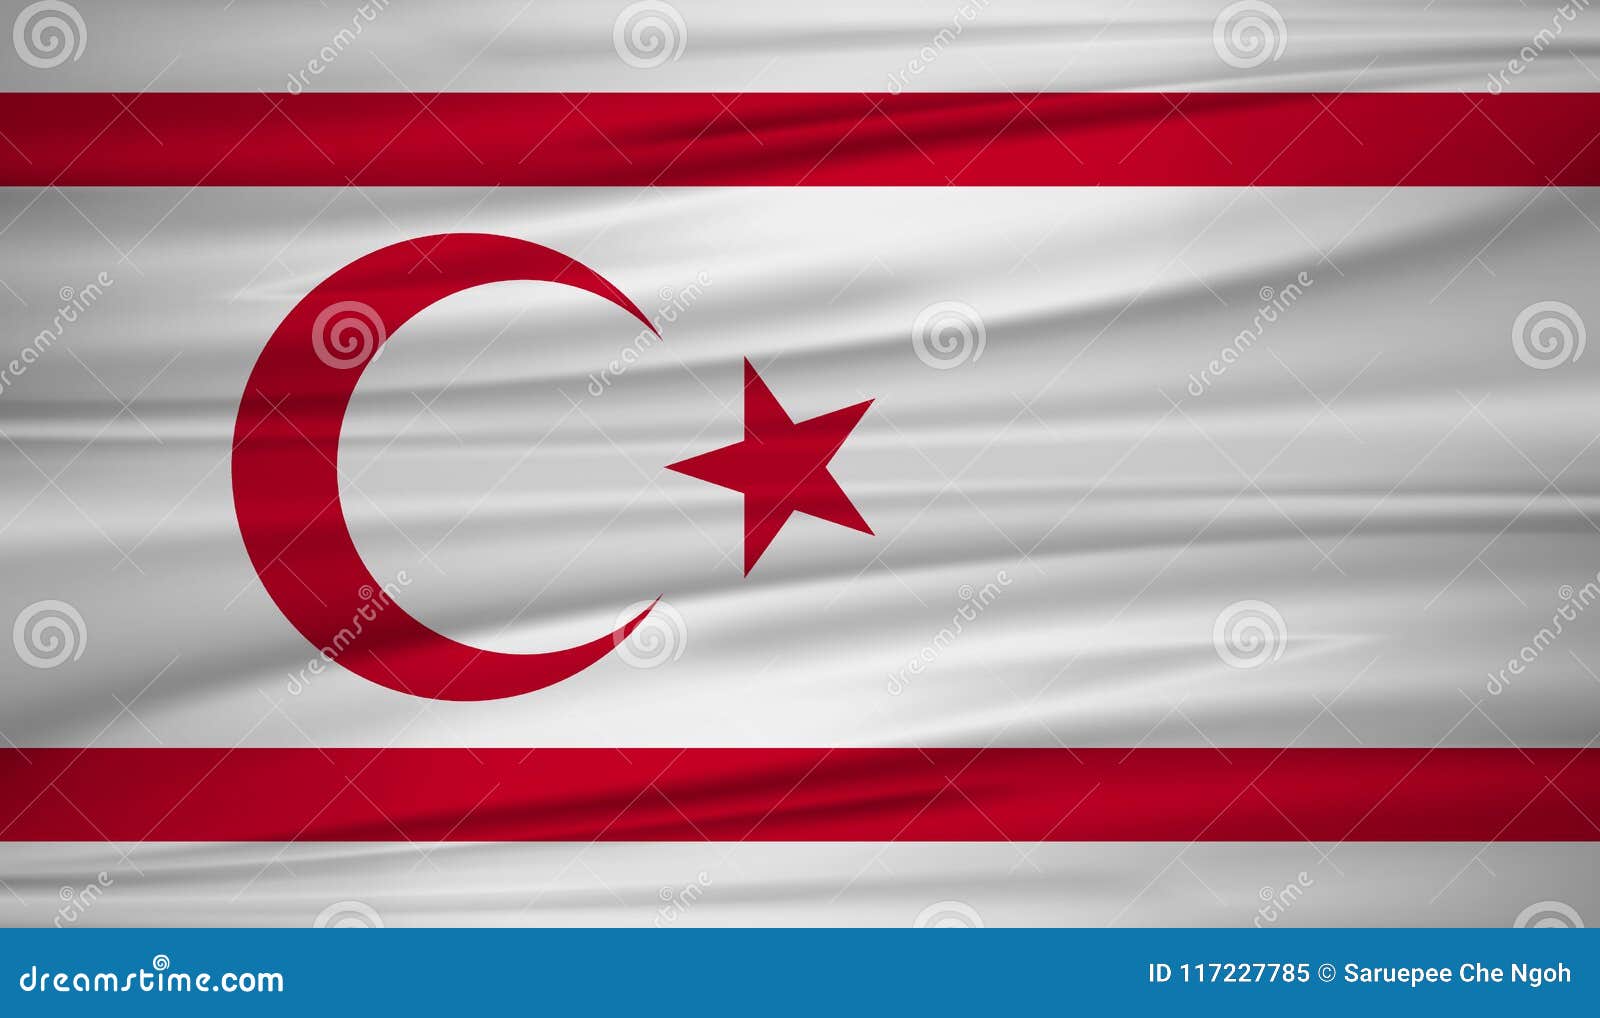 Сколько звезд на флаге турции. Флаг турецкой Республики. Флаг Турции 90x150. Флаг Османской Республики. Флаг Республика Турции вэ.